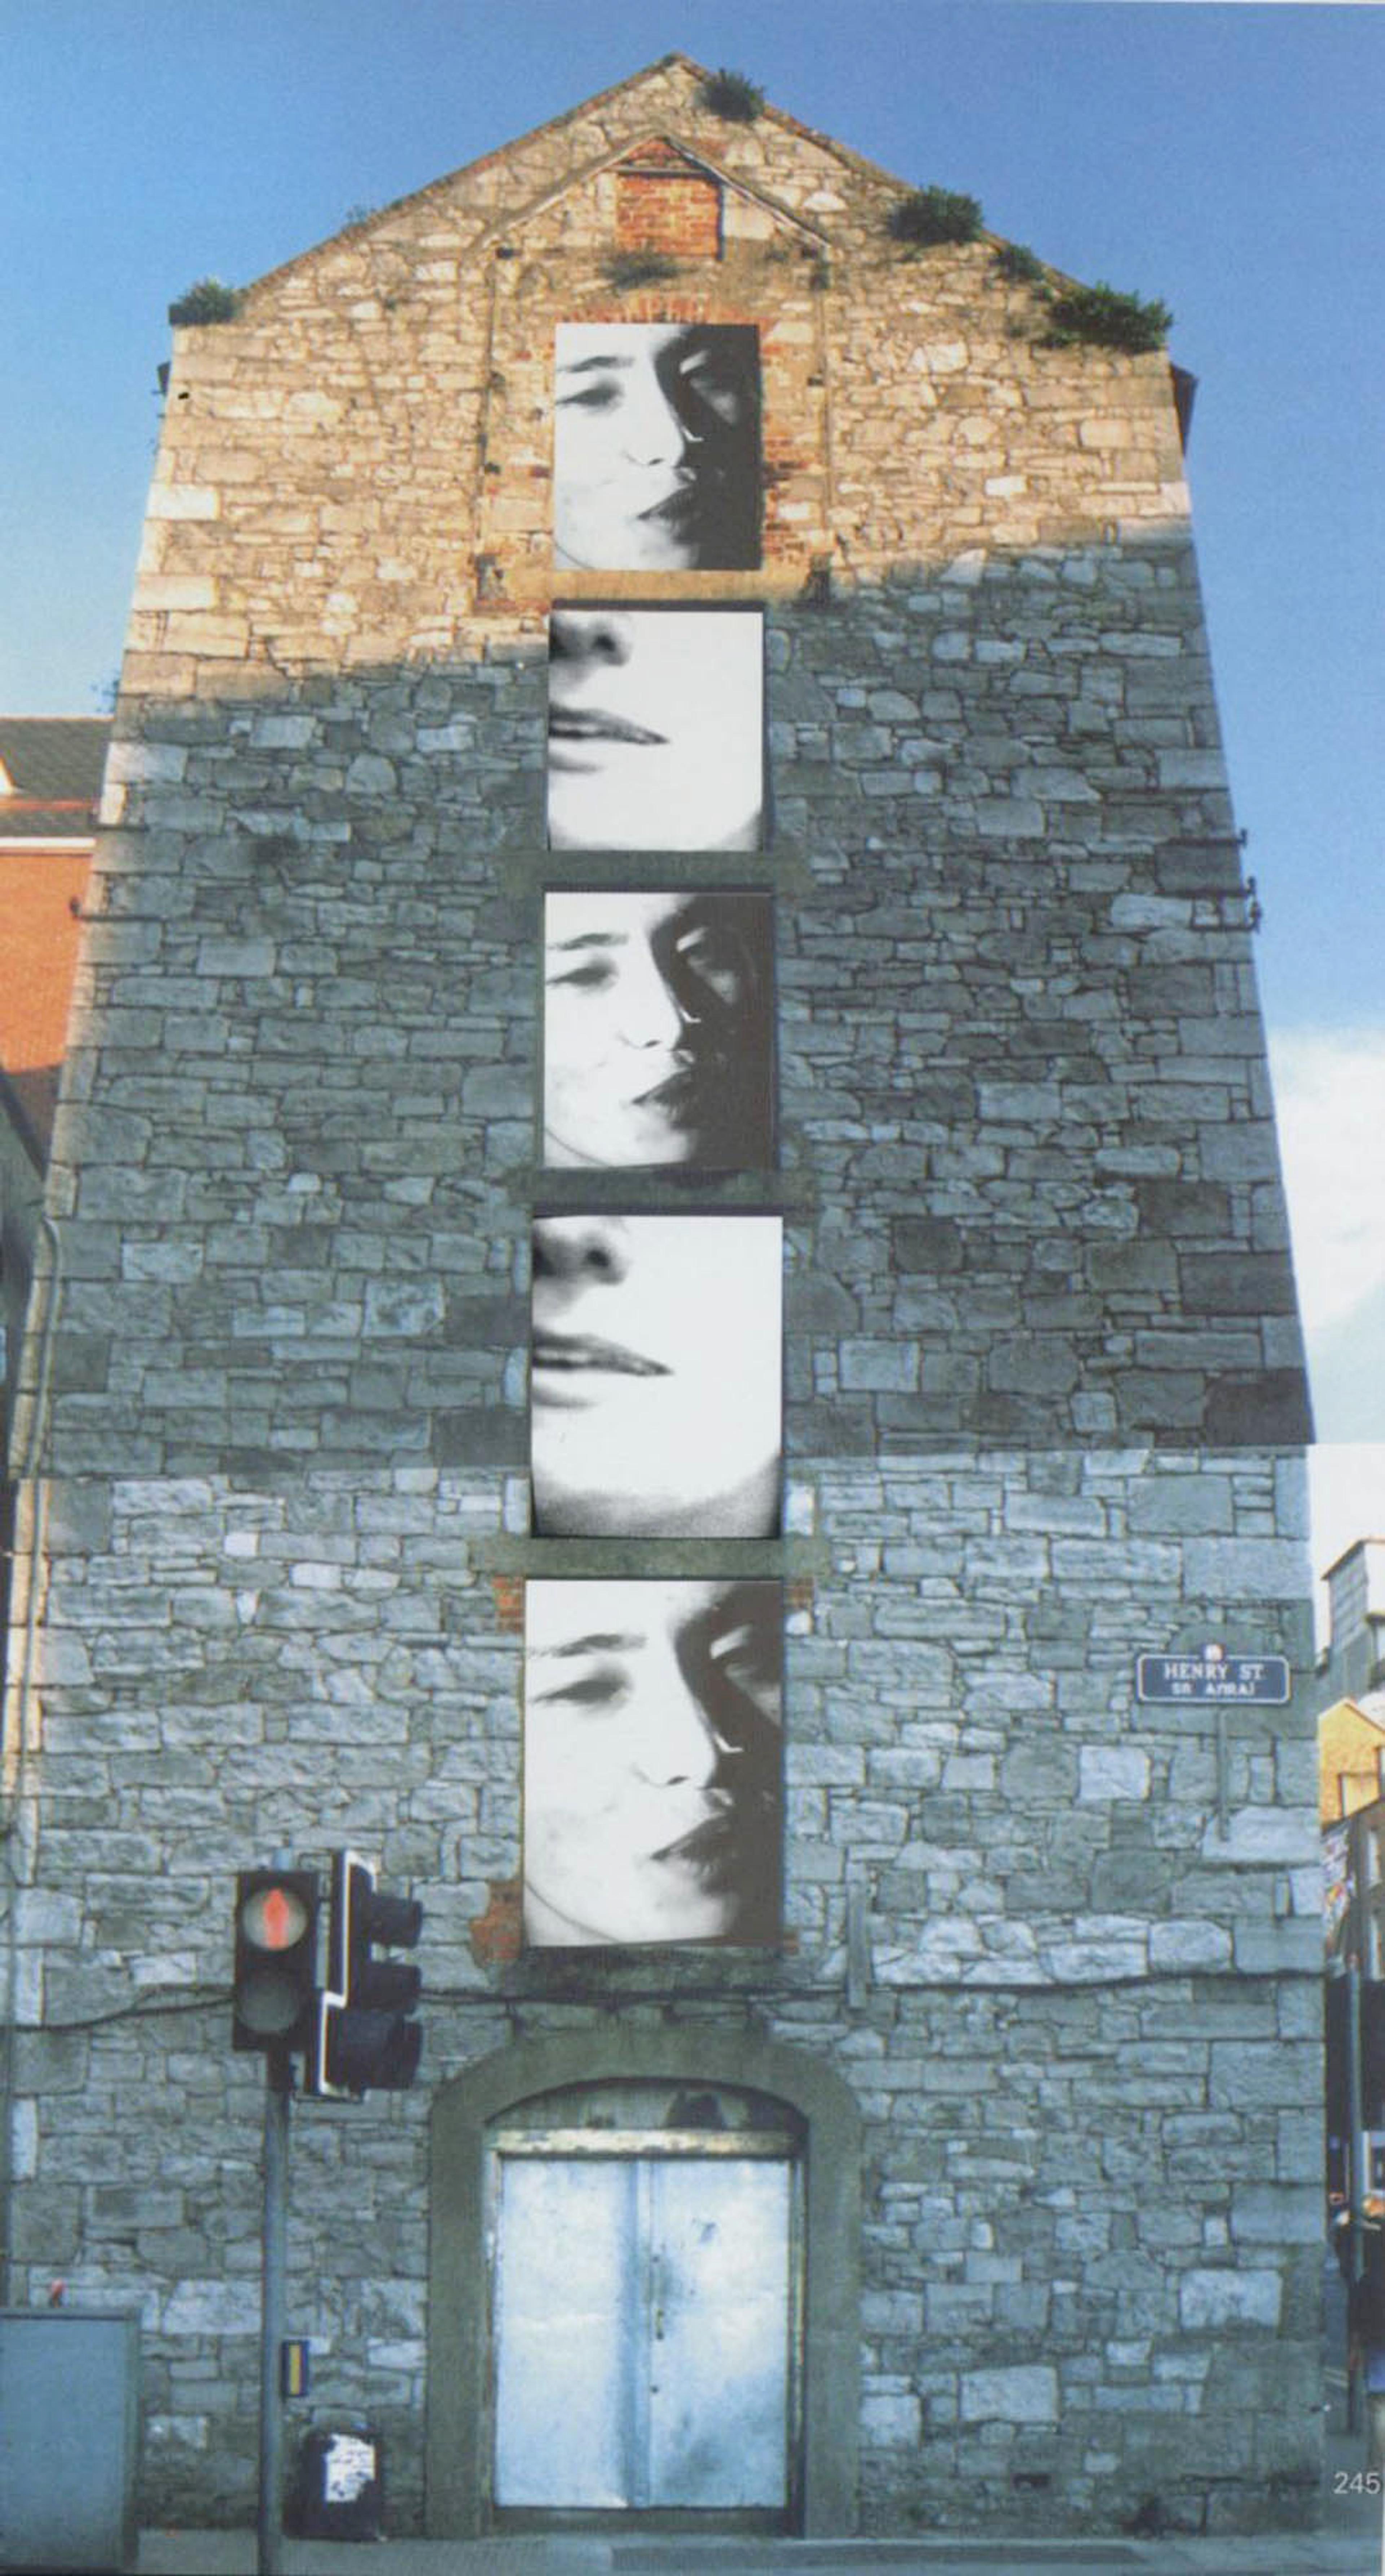 (2001) Andrew Duggan, Tower, 2001, 5 photocopies. 